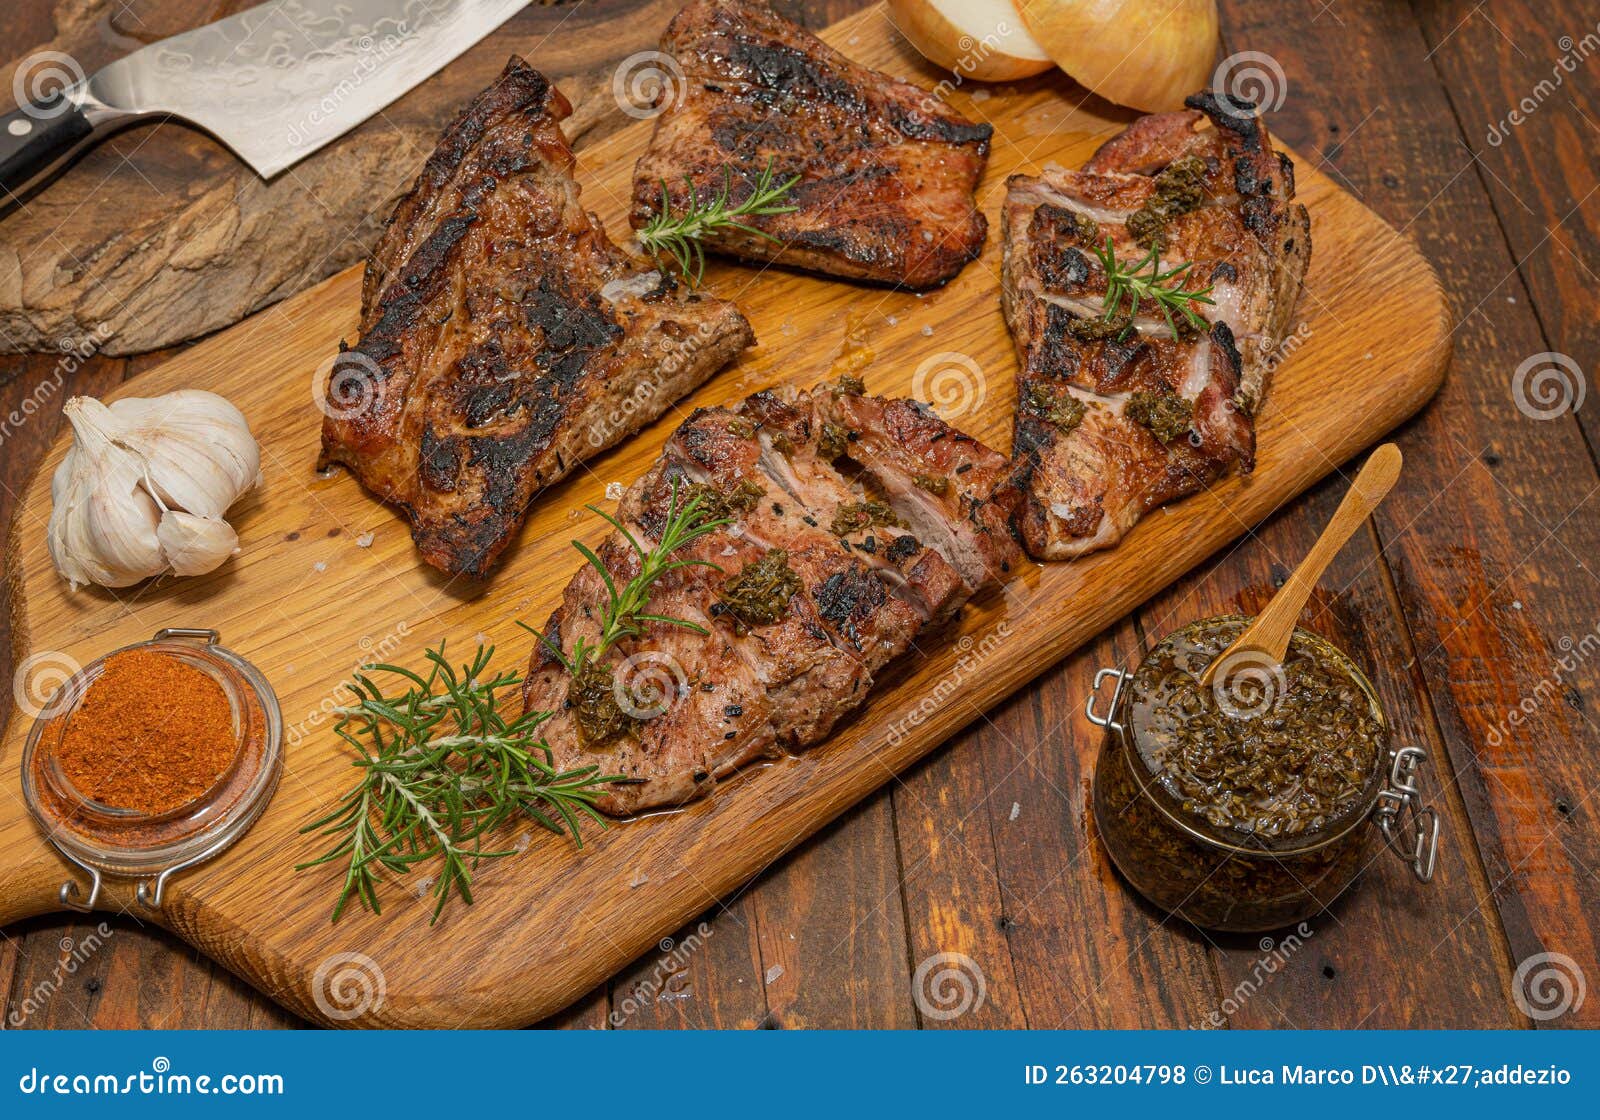 close up of freshly cooked pork secreto iberico with chimichurri